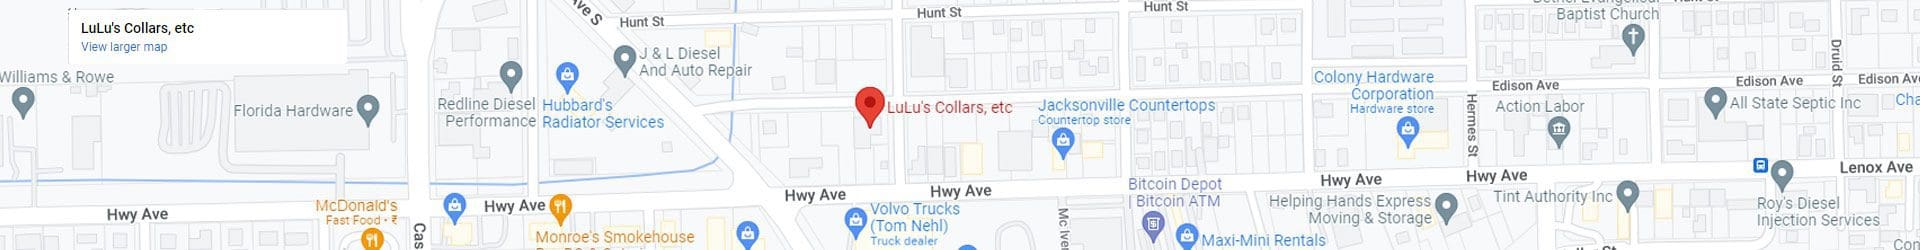 LuLu's Collars Business address map